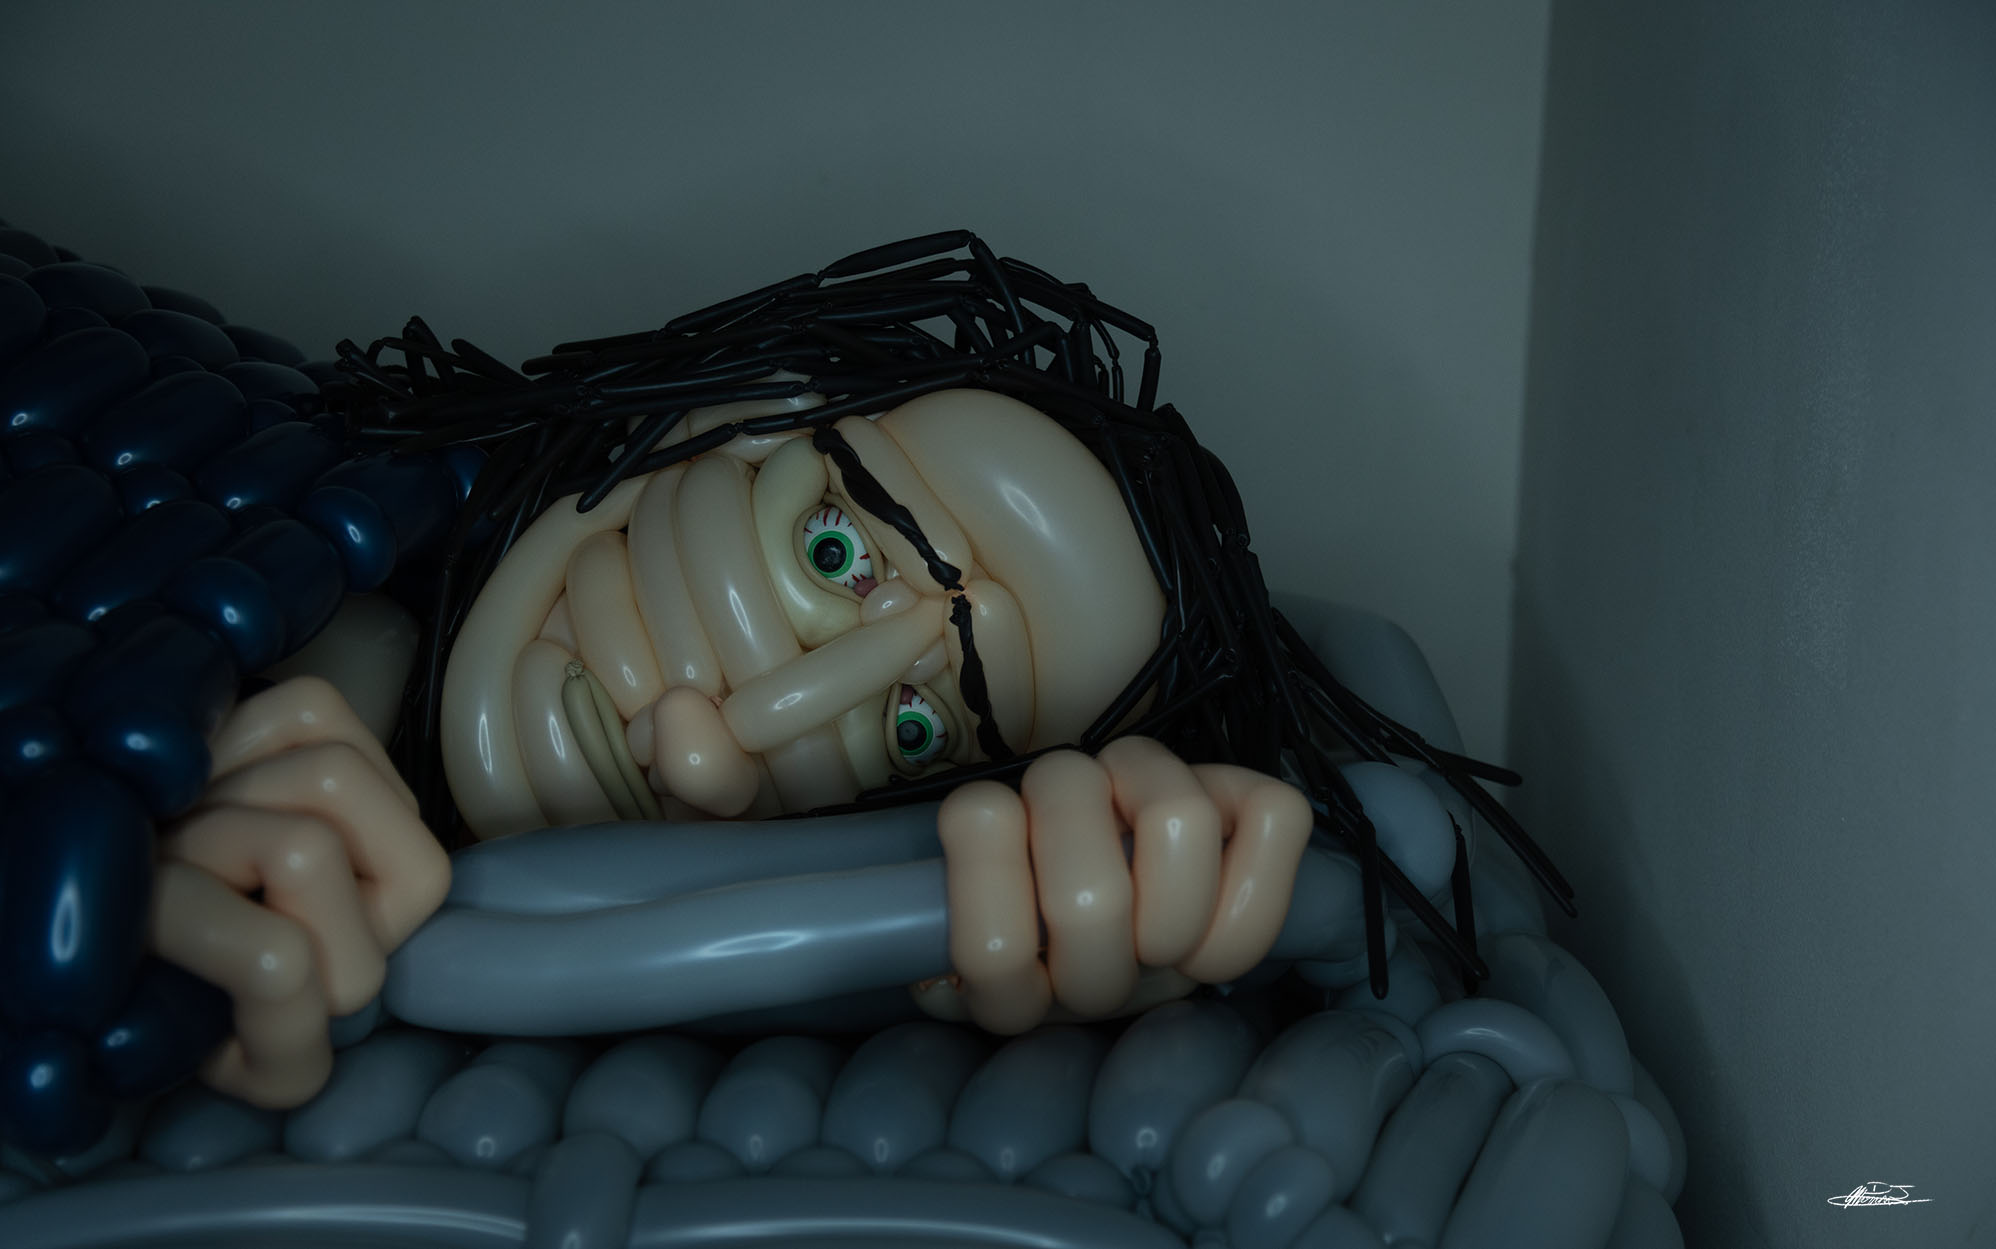 Sometimes Falling Asleep Feels Like Dying balloon sculpture of man in bed lying awake